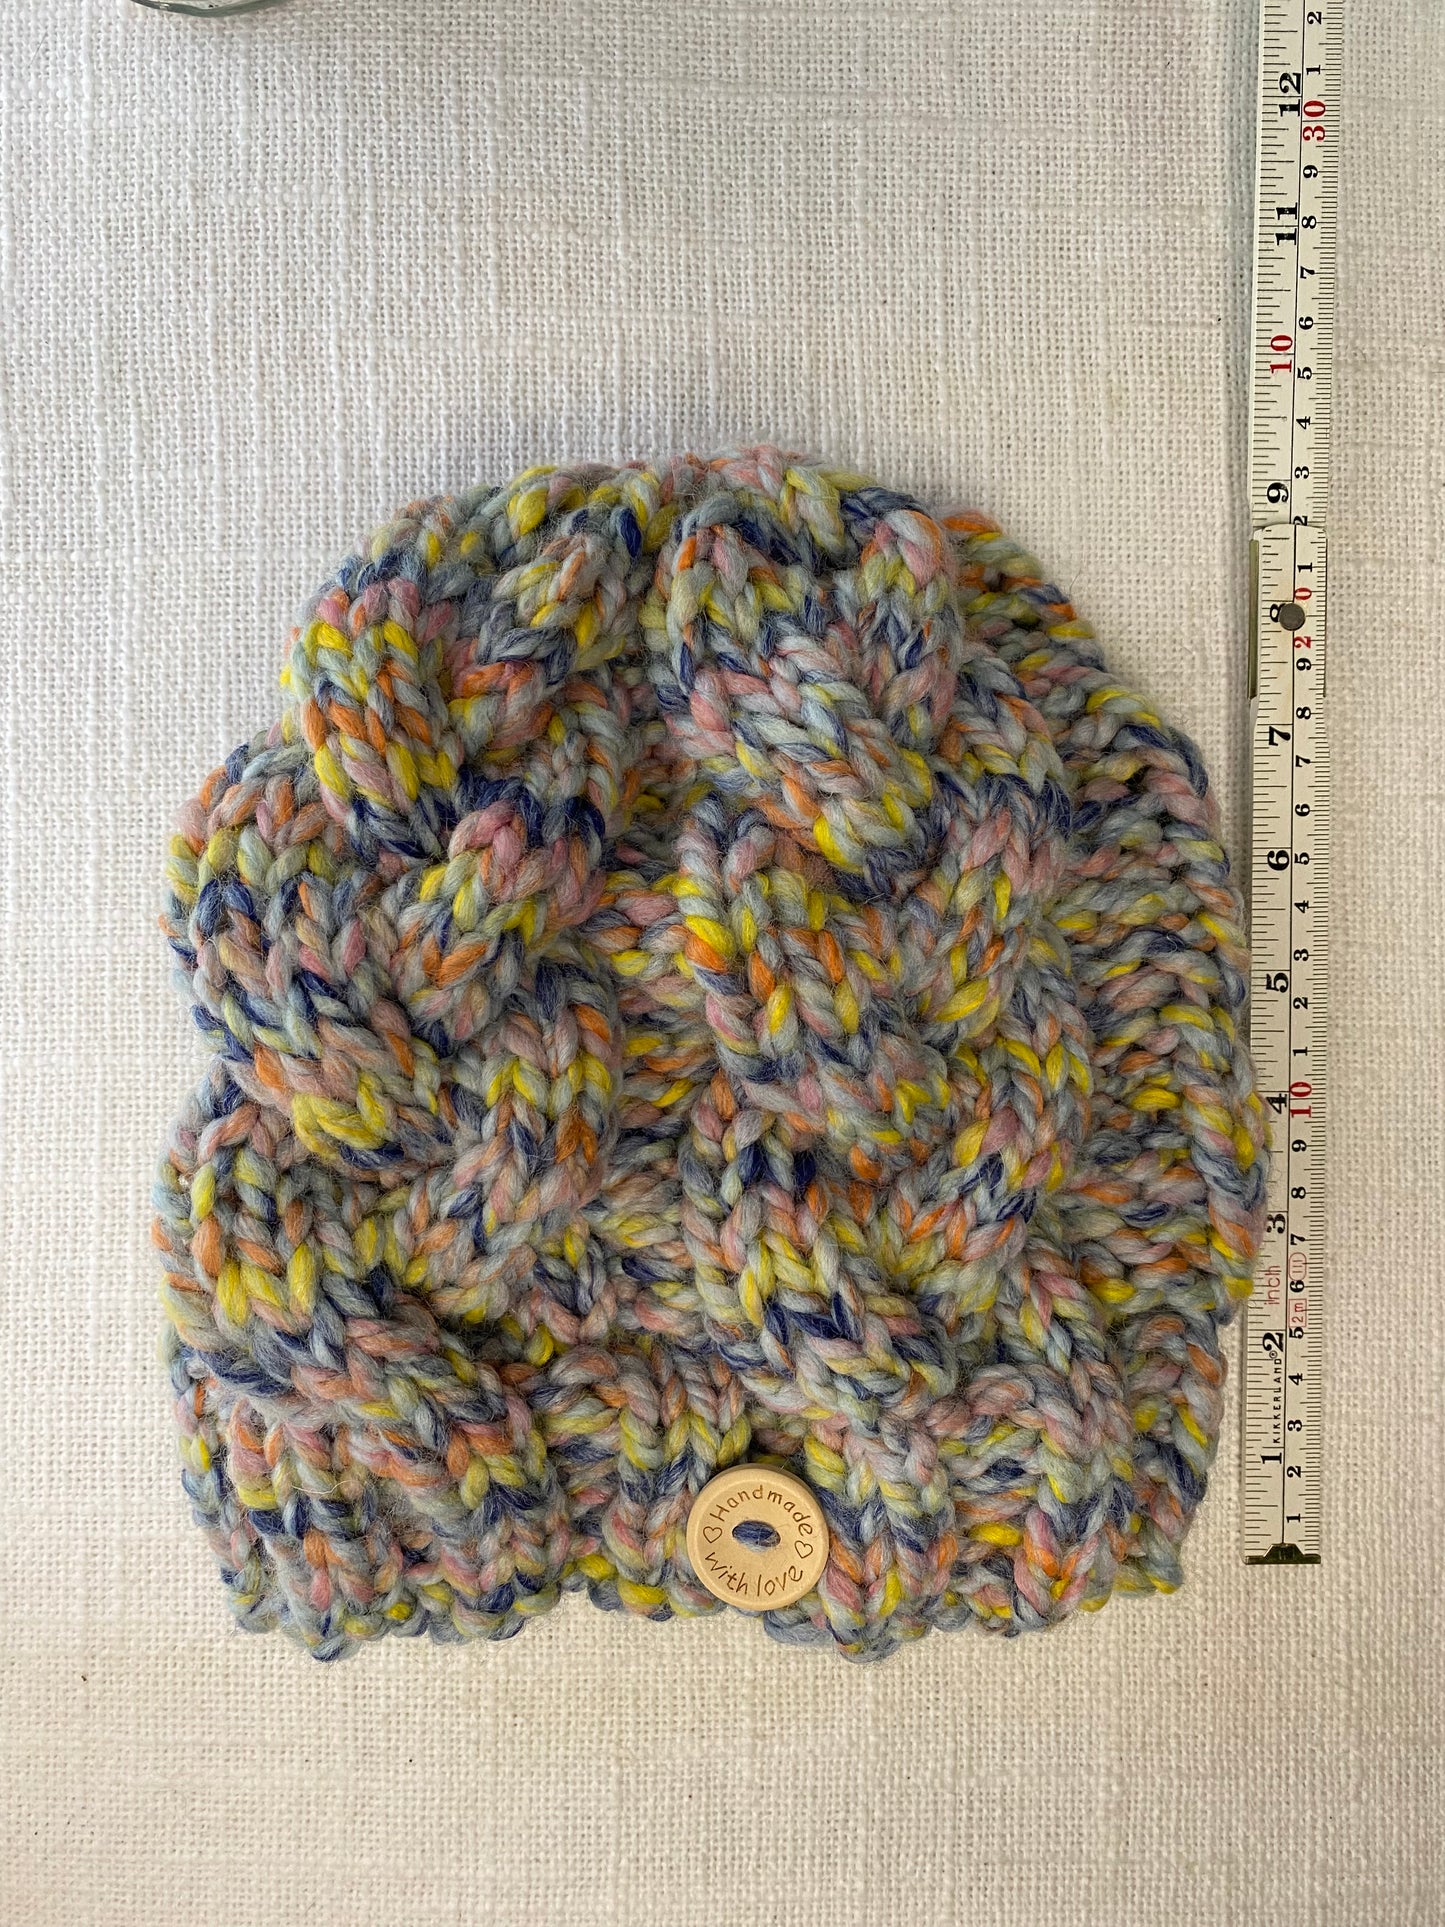 Cozy Cables Hat - Wool Blend Fiber in Pinwheel